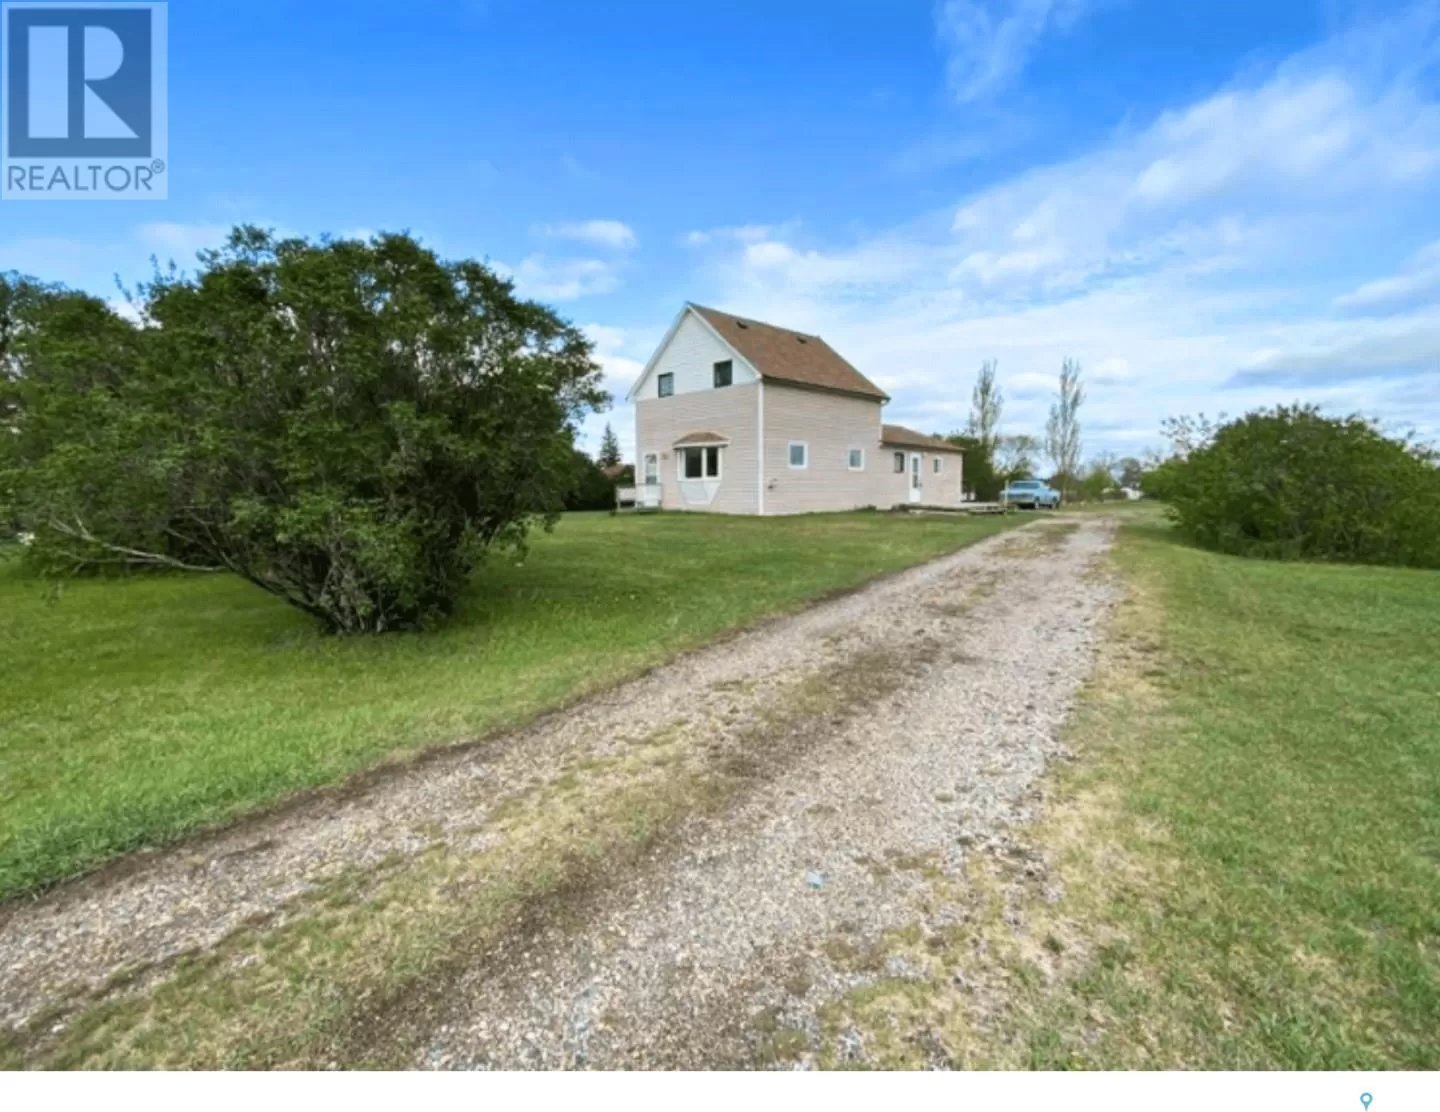 House for rent: 204 King Street, Spy Hill, Saskatchewan S0A 3W0